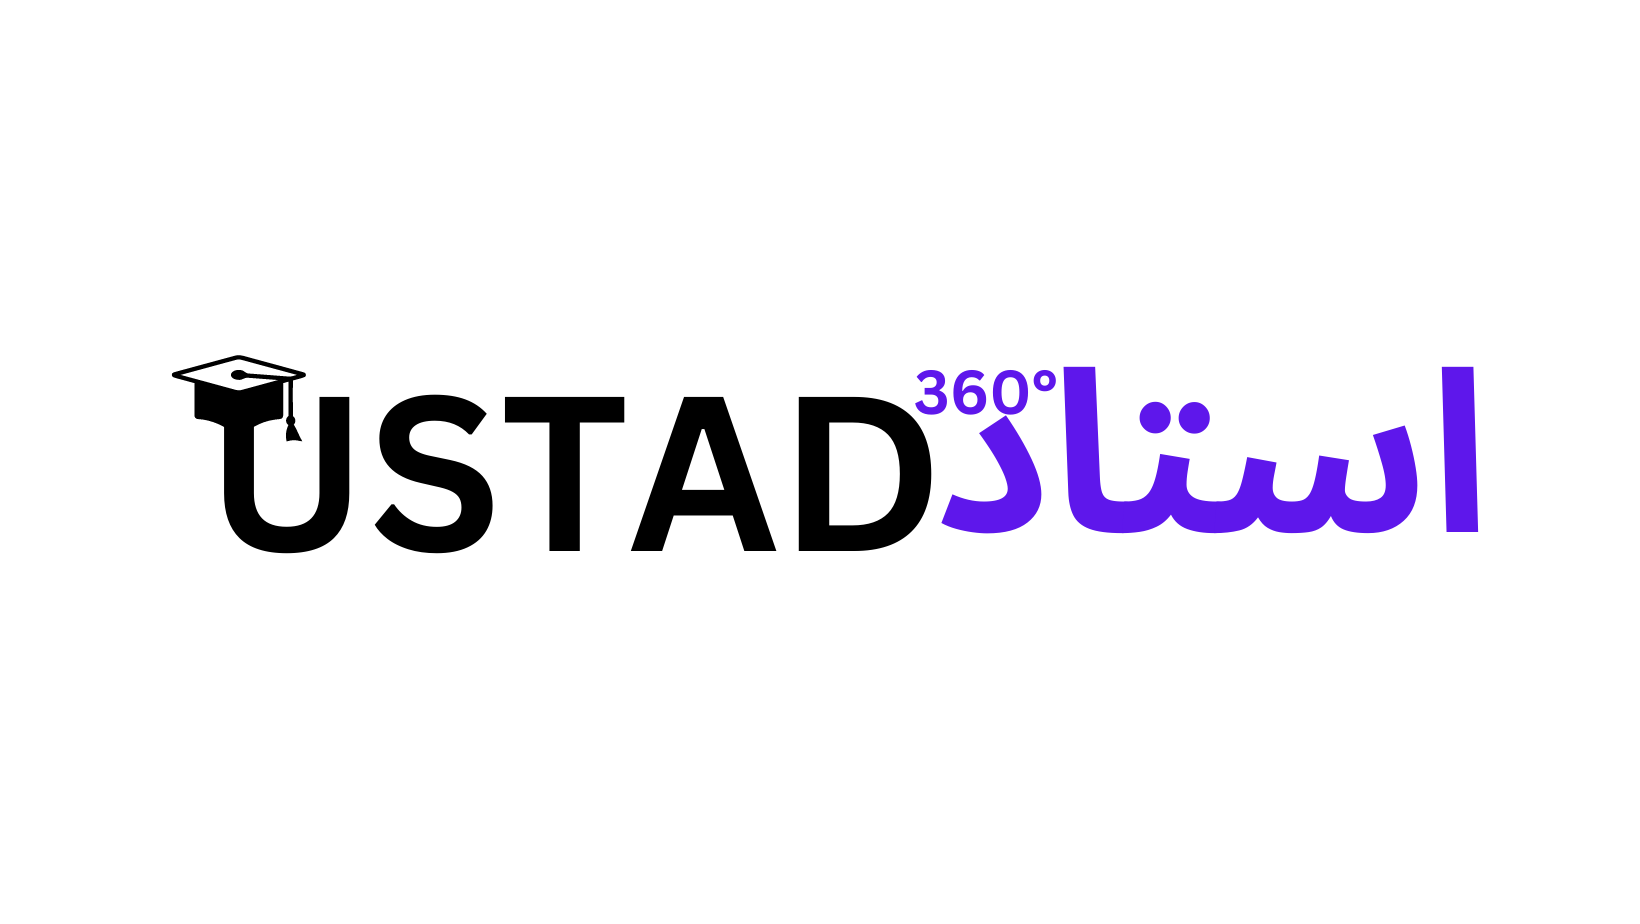 Ustad360.com - Founded by Qasim Tariq